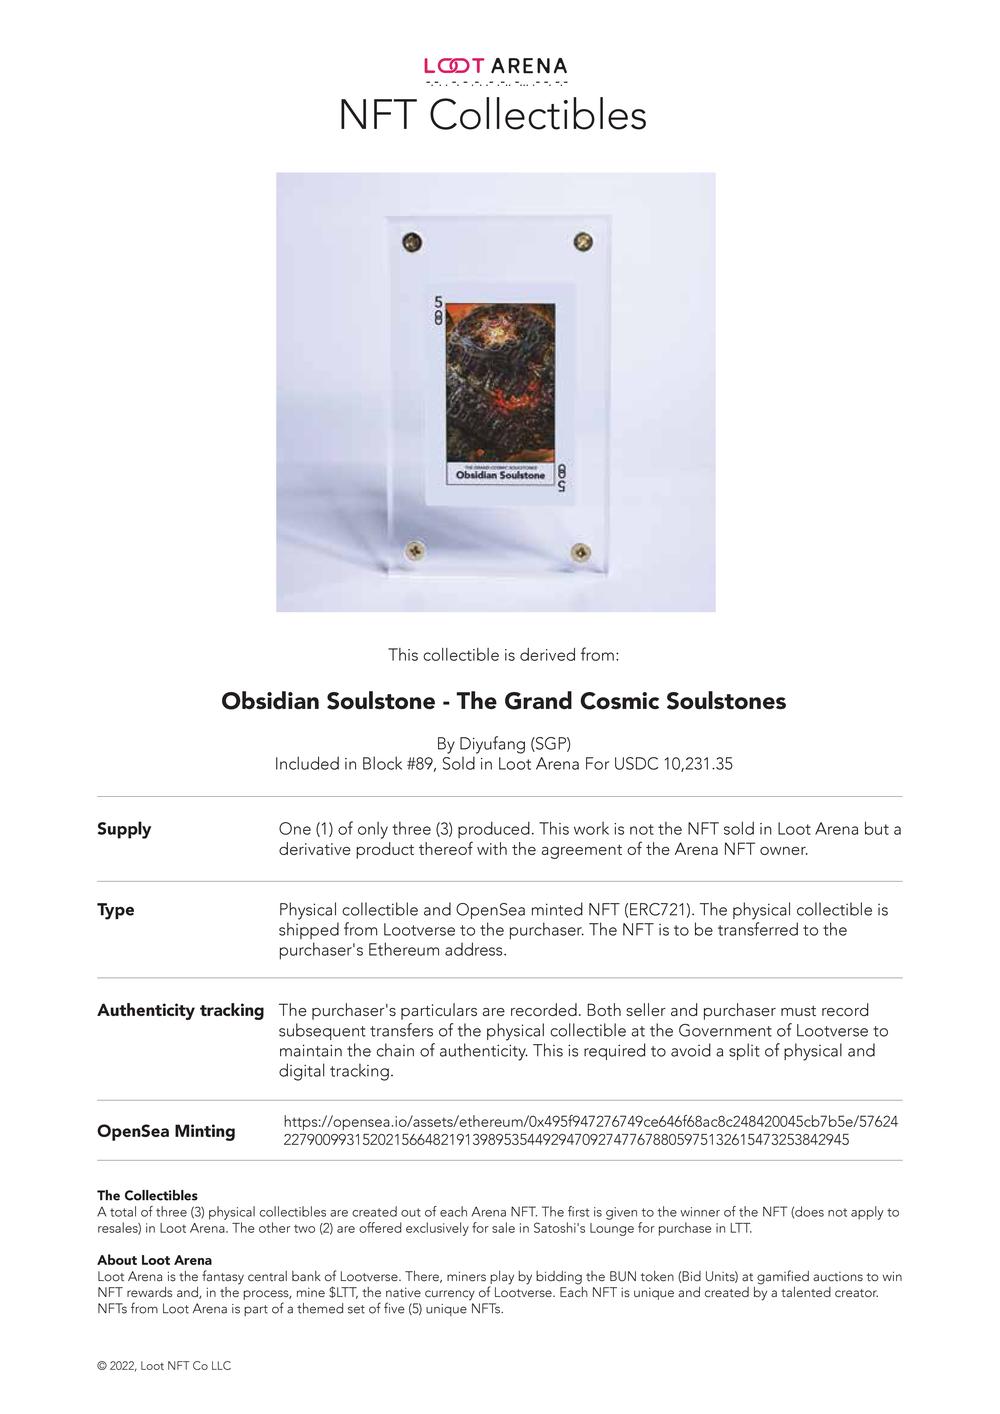 Contract_Obsidian Soulstone.pdf